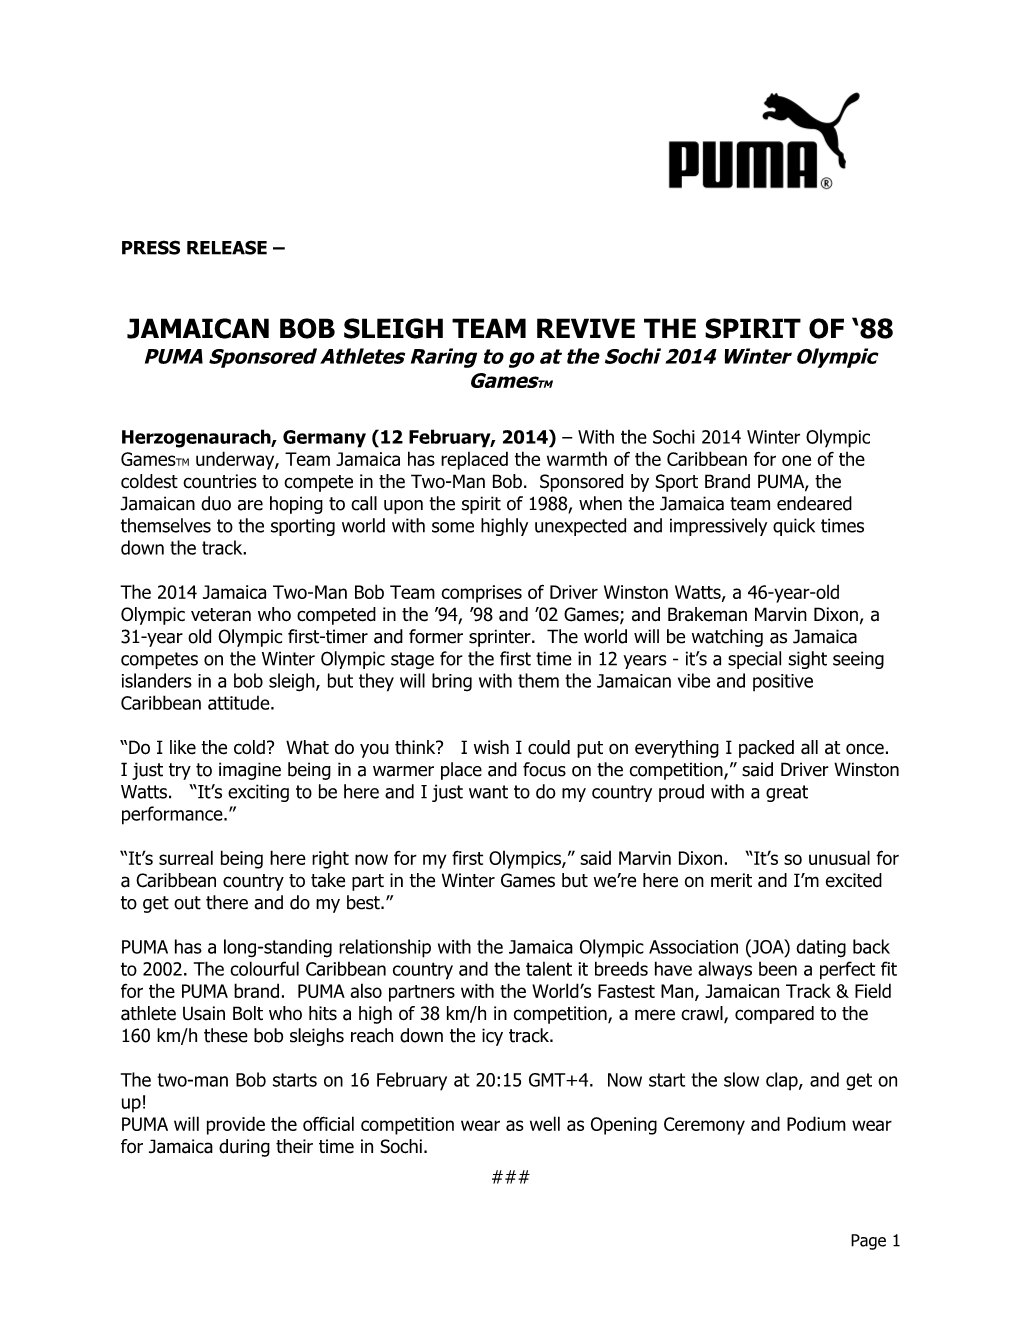 Jamaican Bob Sleigh Team Revive the Spirit of 88